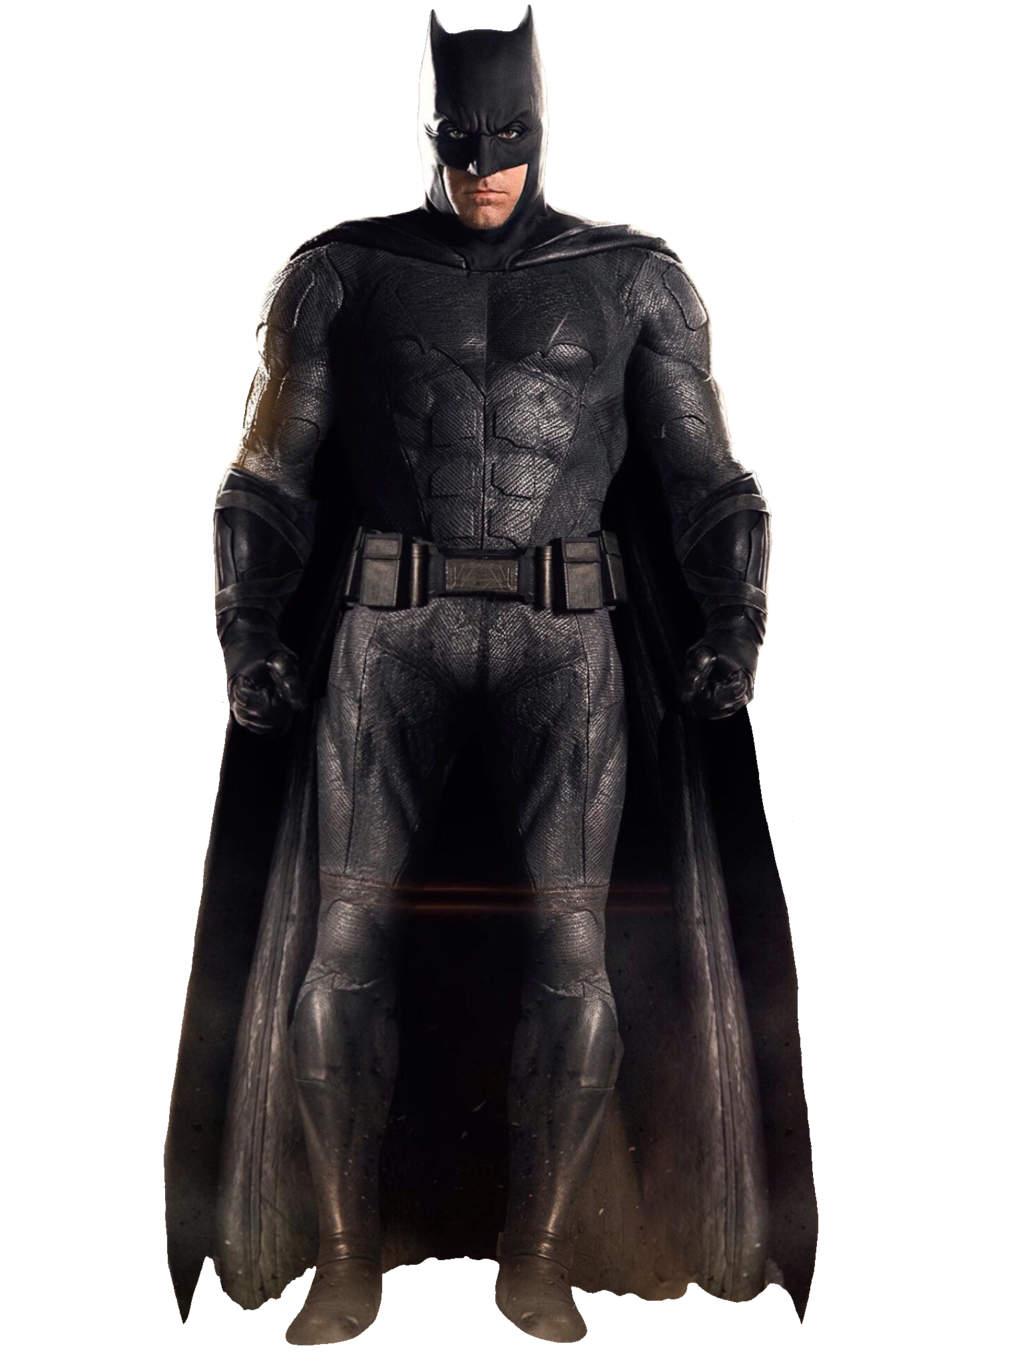 Immagini PNG di Justice League Batman